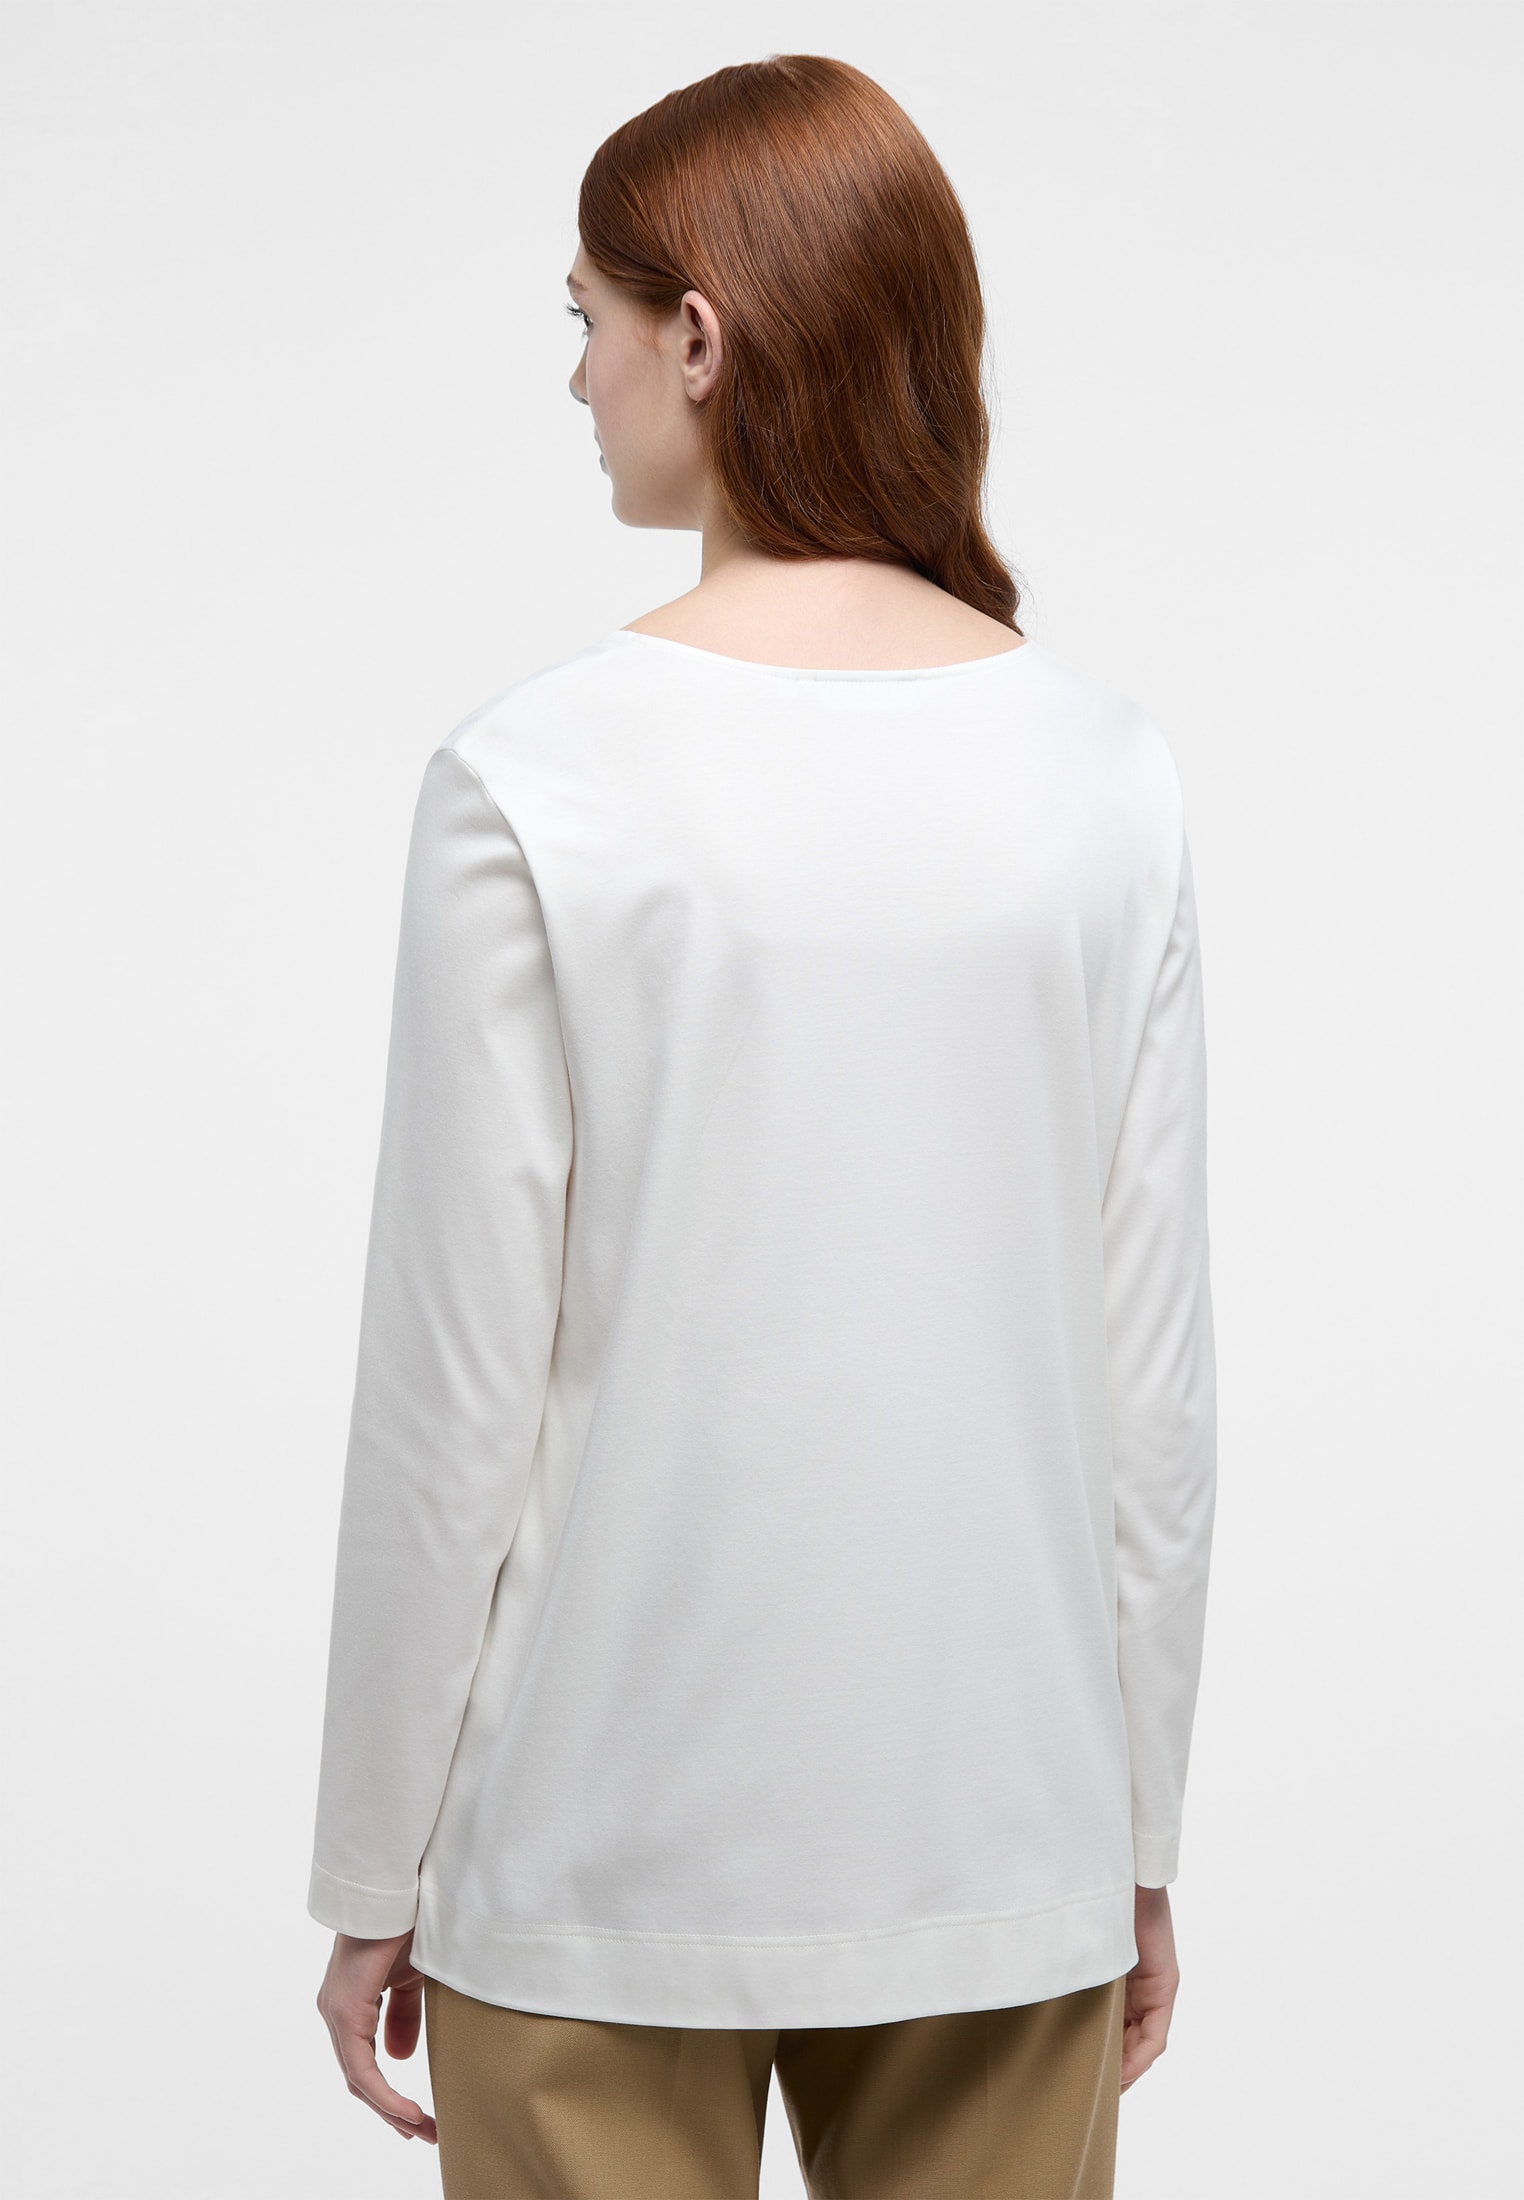 off-white in | Shirt | Viscose | | Langarm Bluse 2BL04252-00-02-46-1/1 46 off-white unifarben